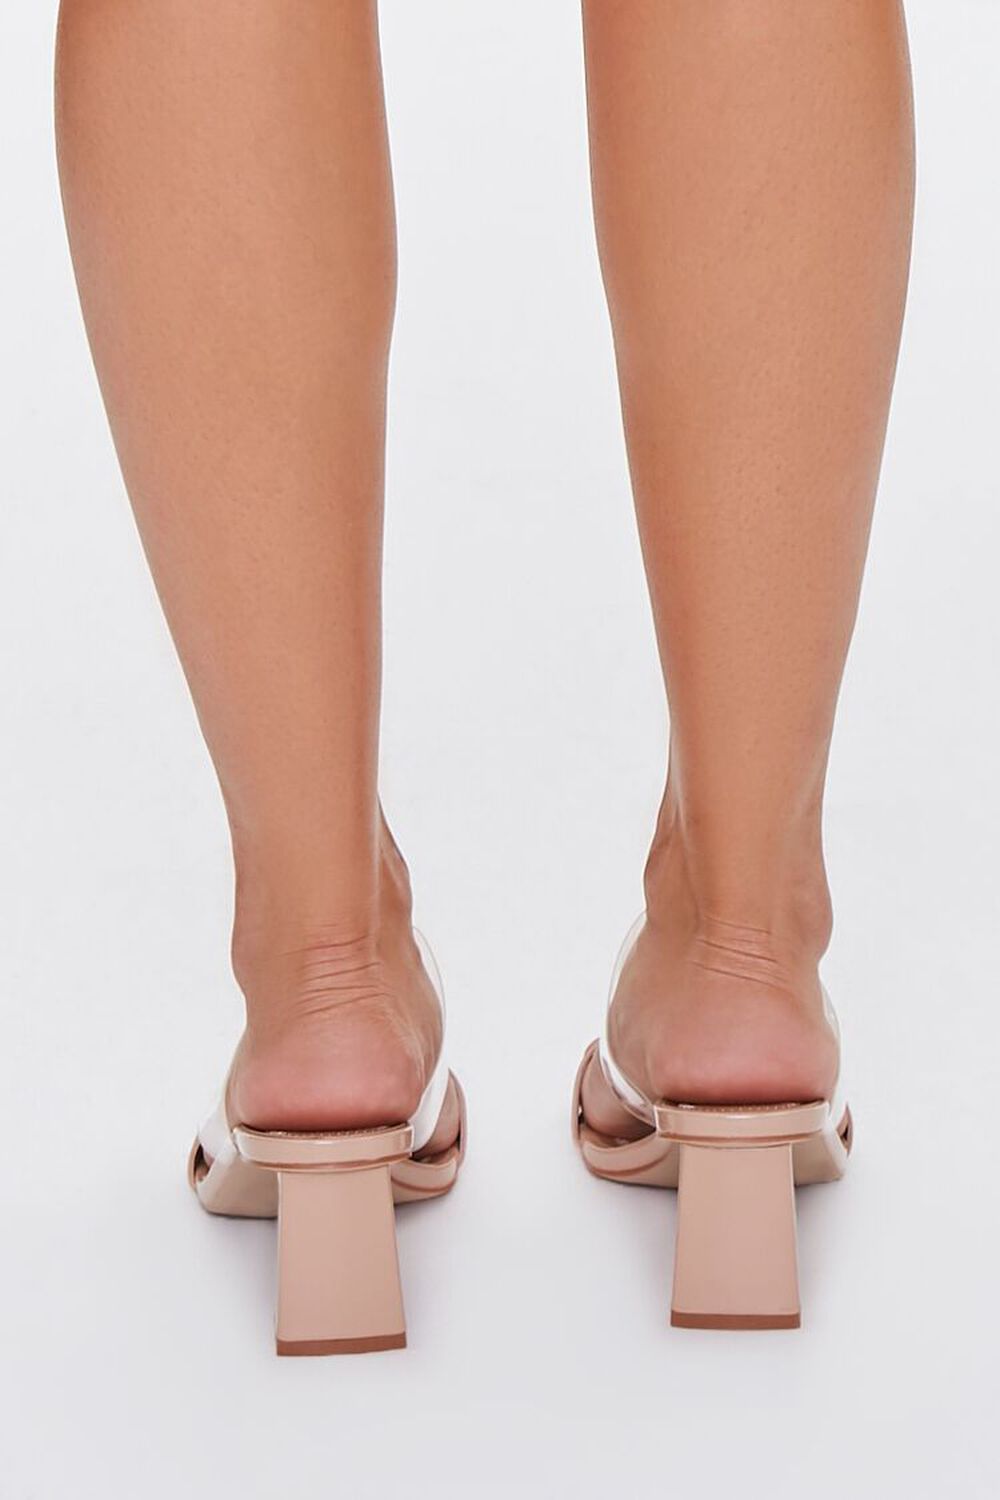 NUDE Transparent-Strap Block Heels, image 3